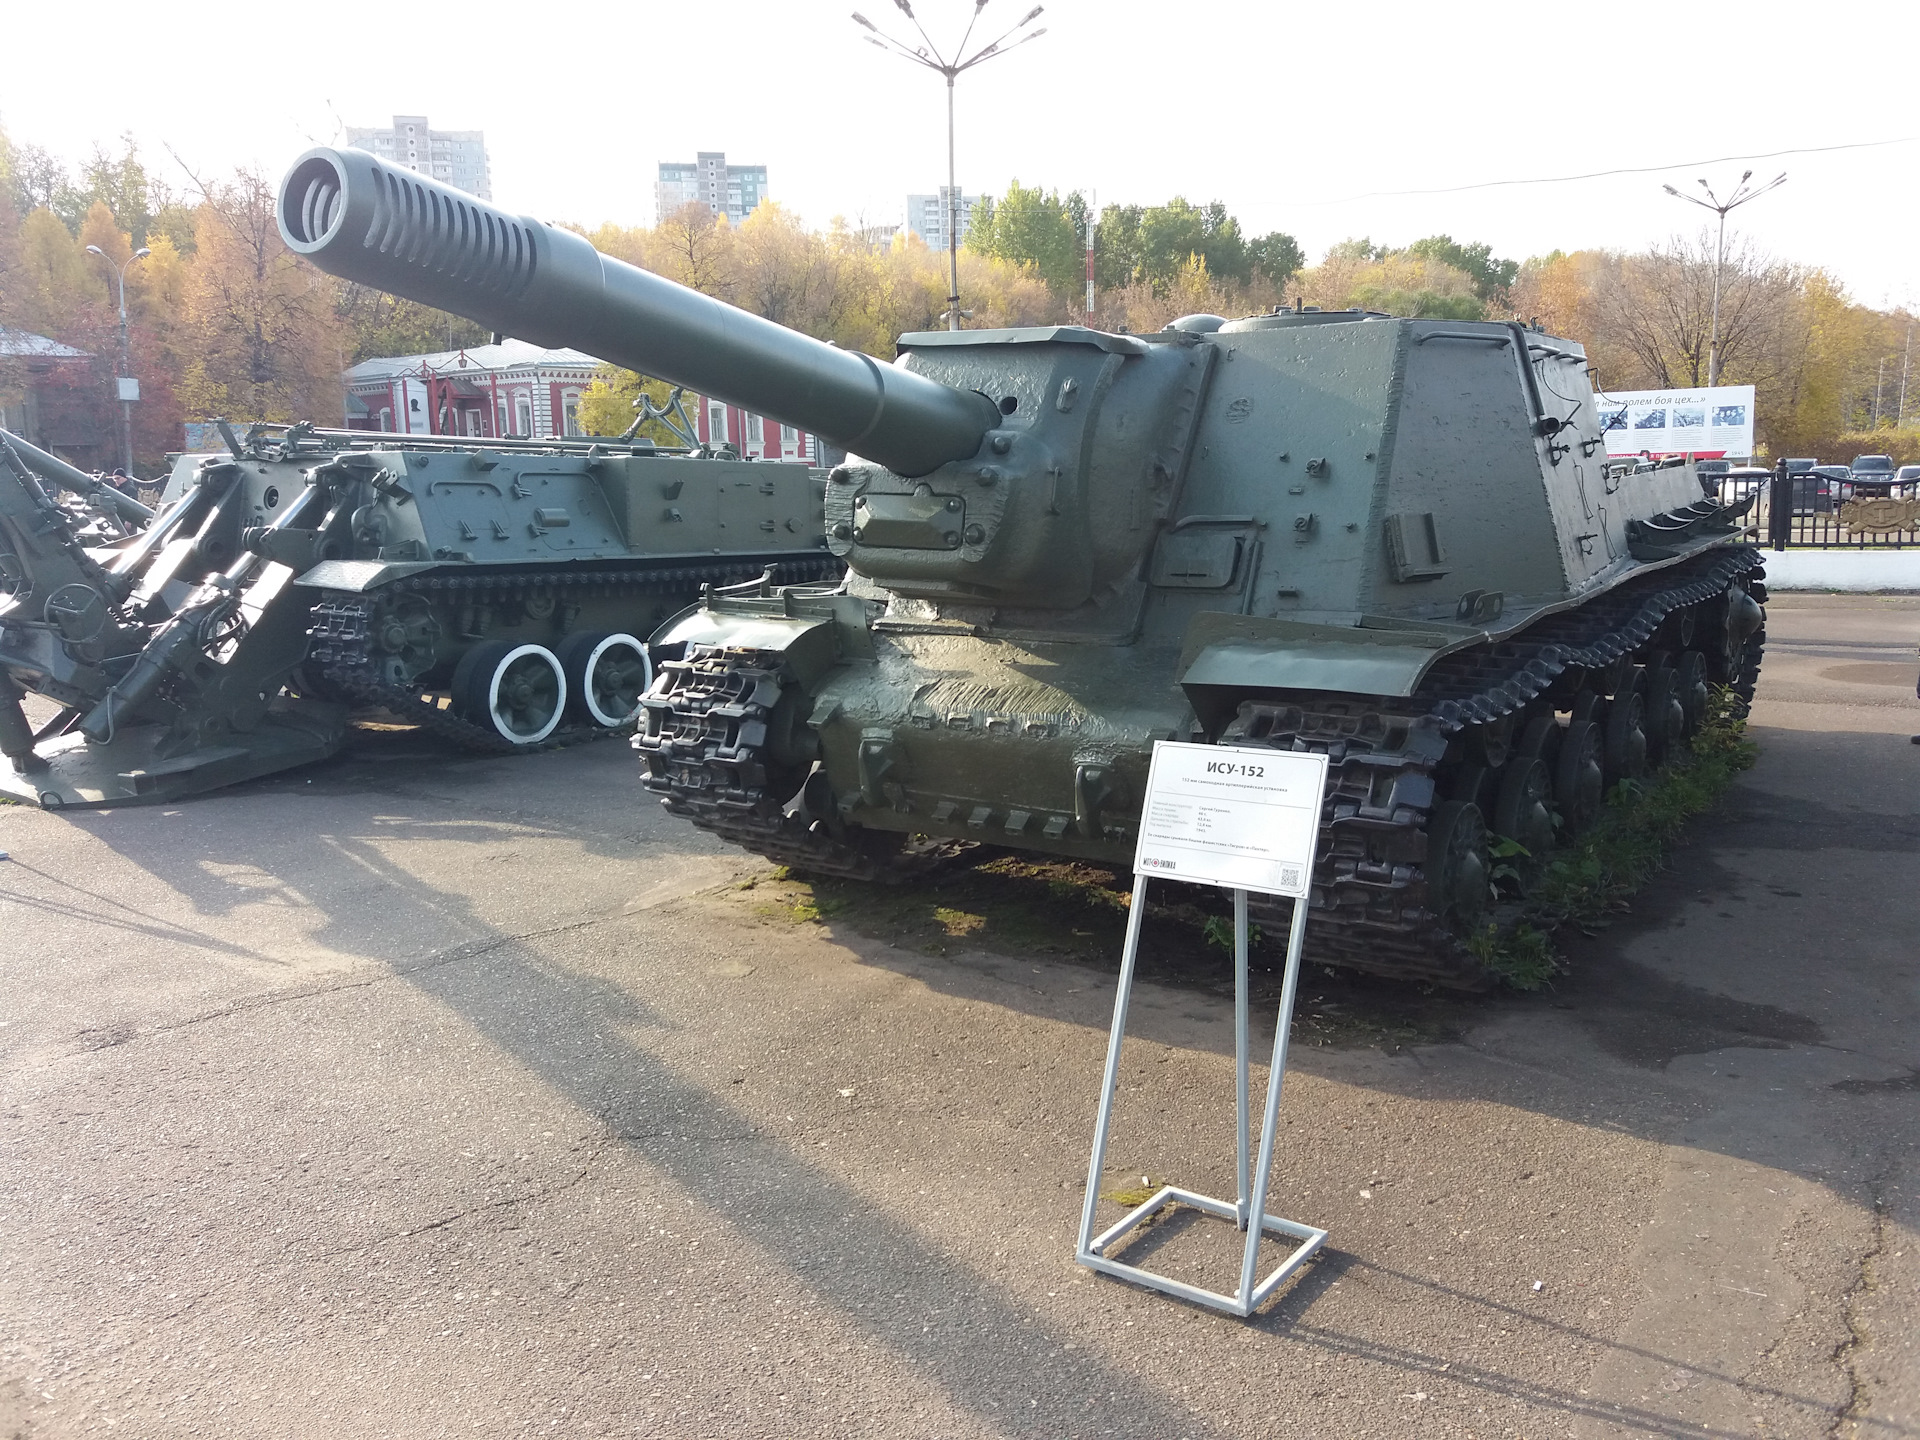 Техника ису. ИСУ-152 артиллерийский музей. ИСУ 152 верхняя Пышма. ИСУ 152 В музее. ИСУ-152 В музее артиллерии Санкт-Петербург.